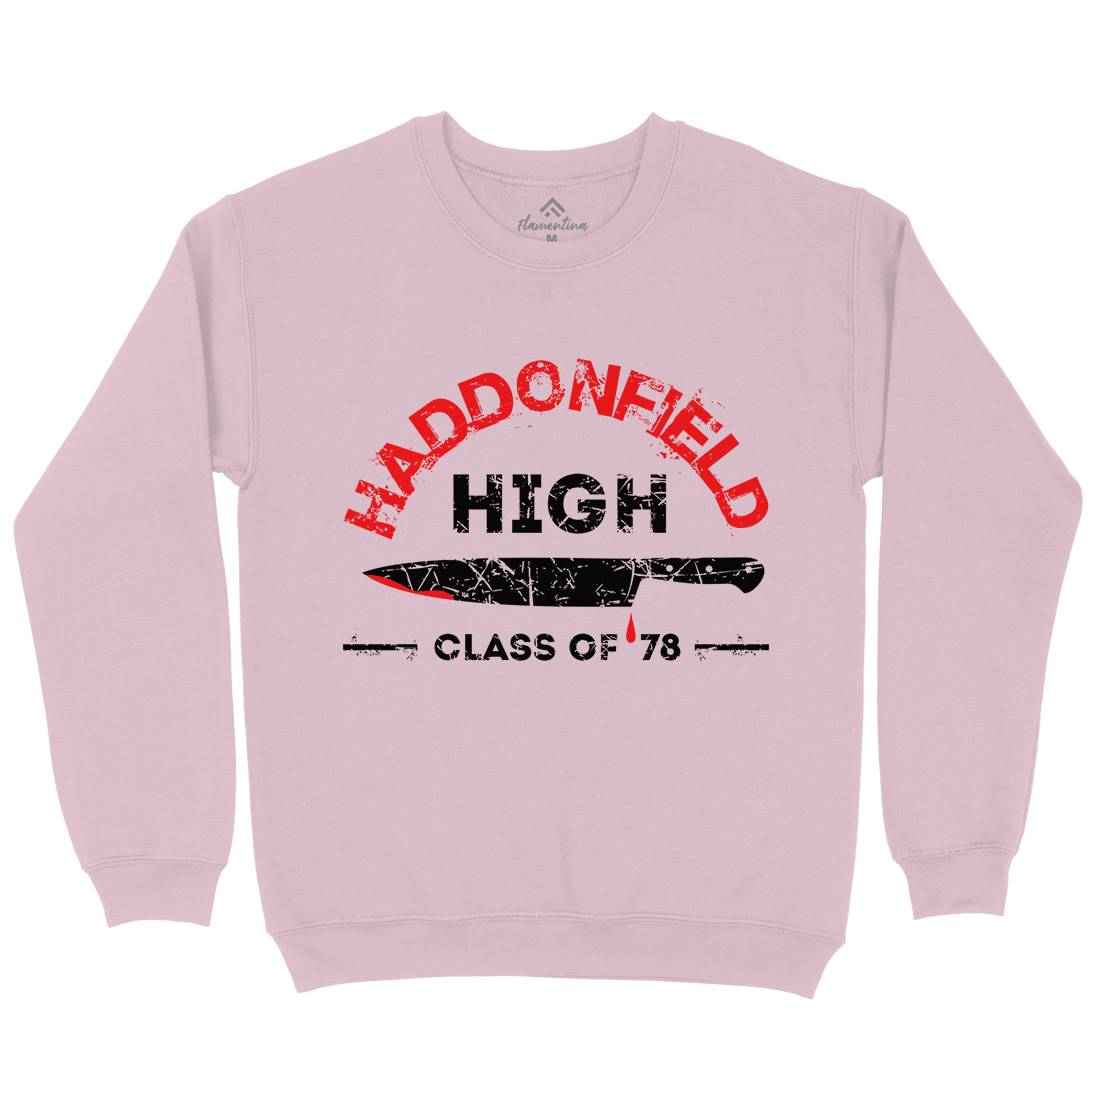 Haddonfield High Kids Crew Neck Sweatshirt Horror D371